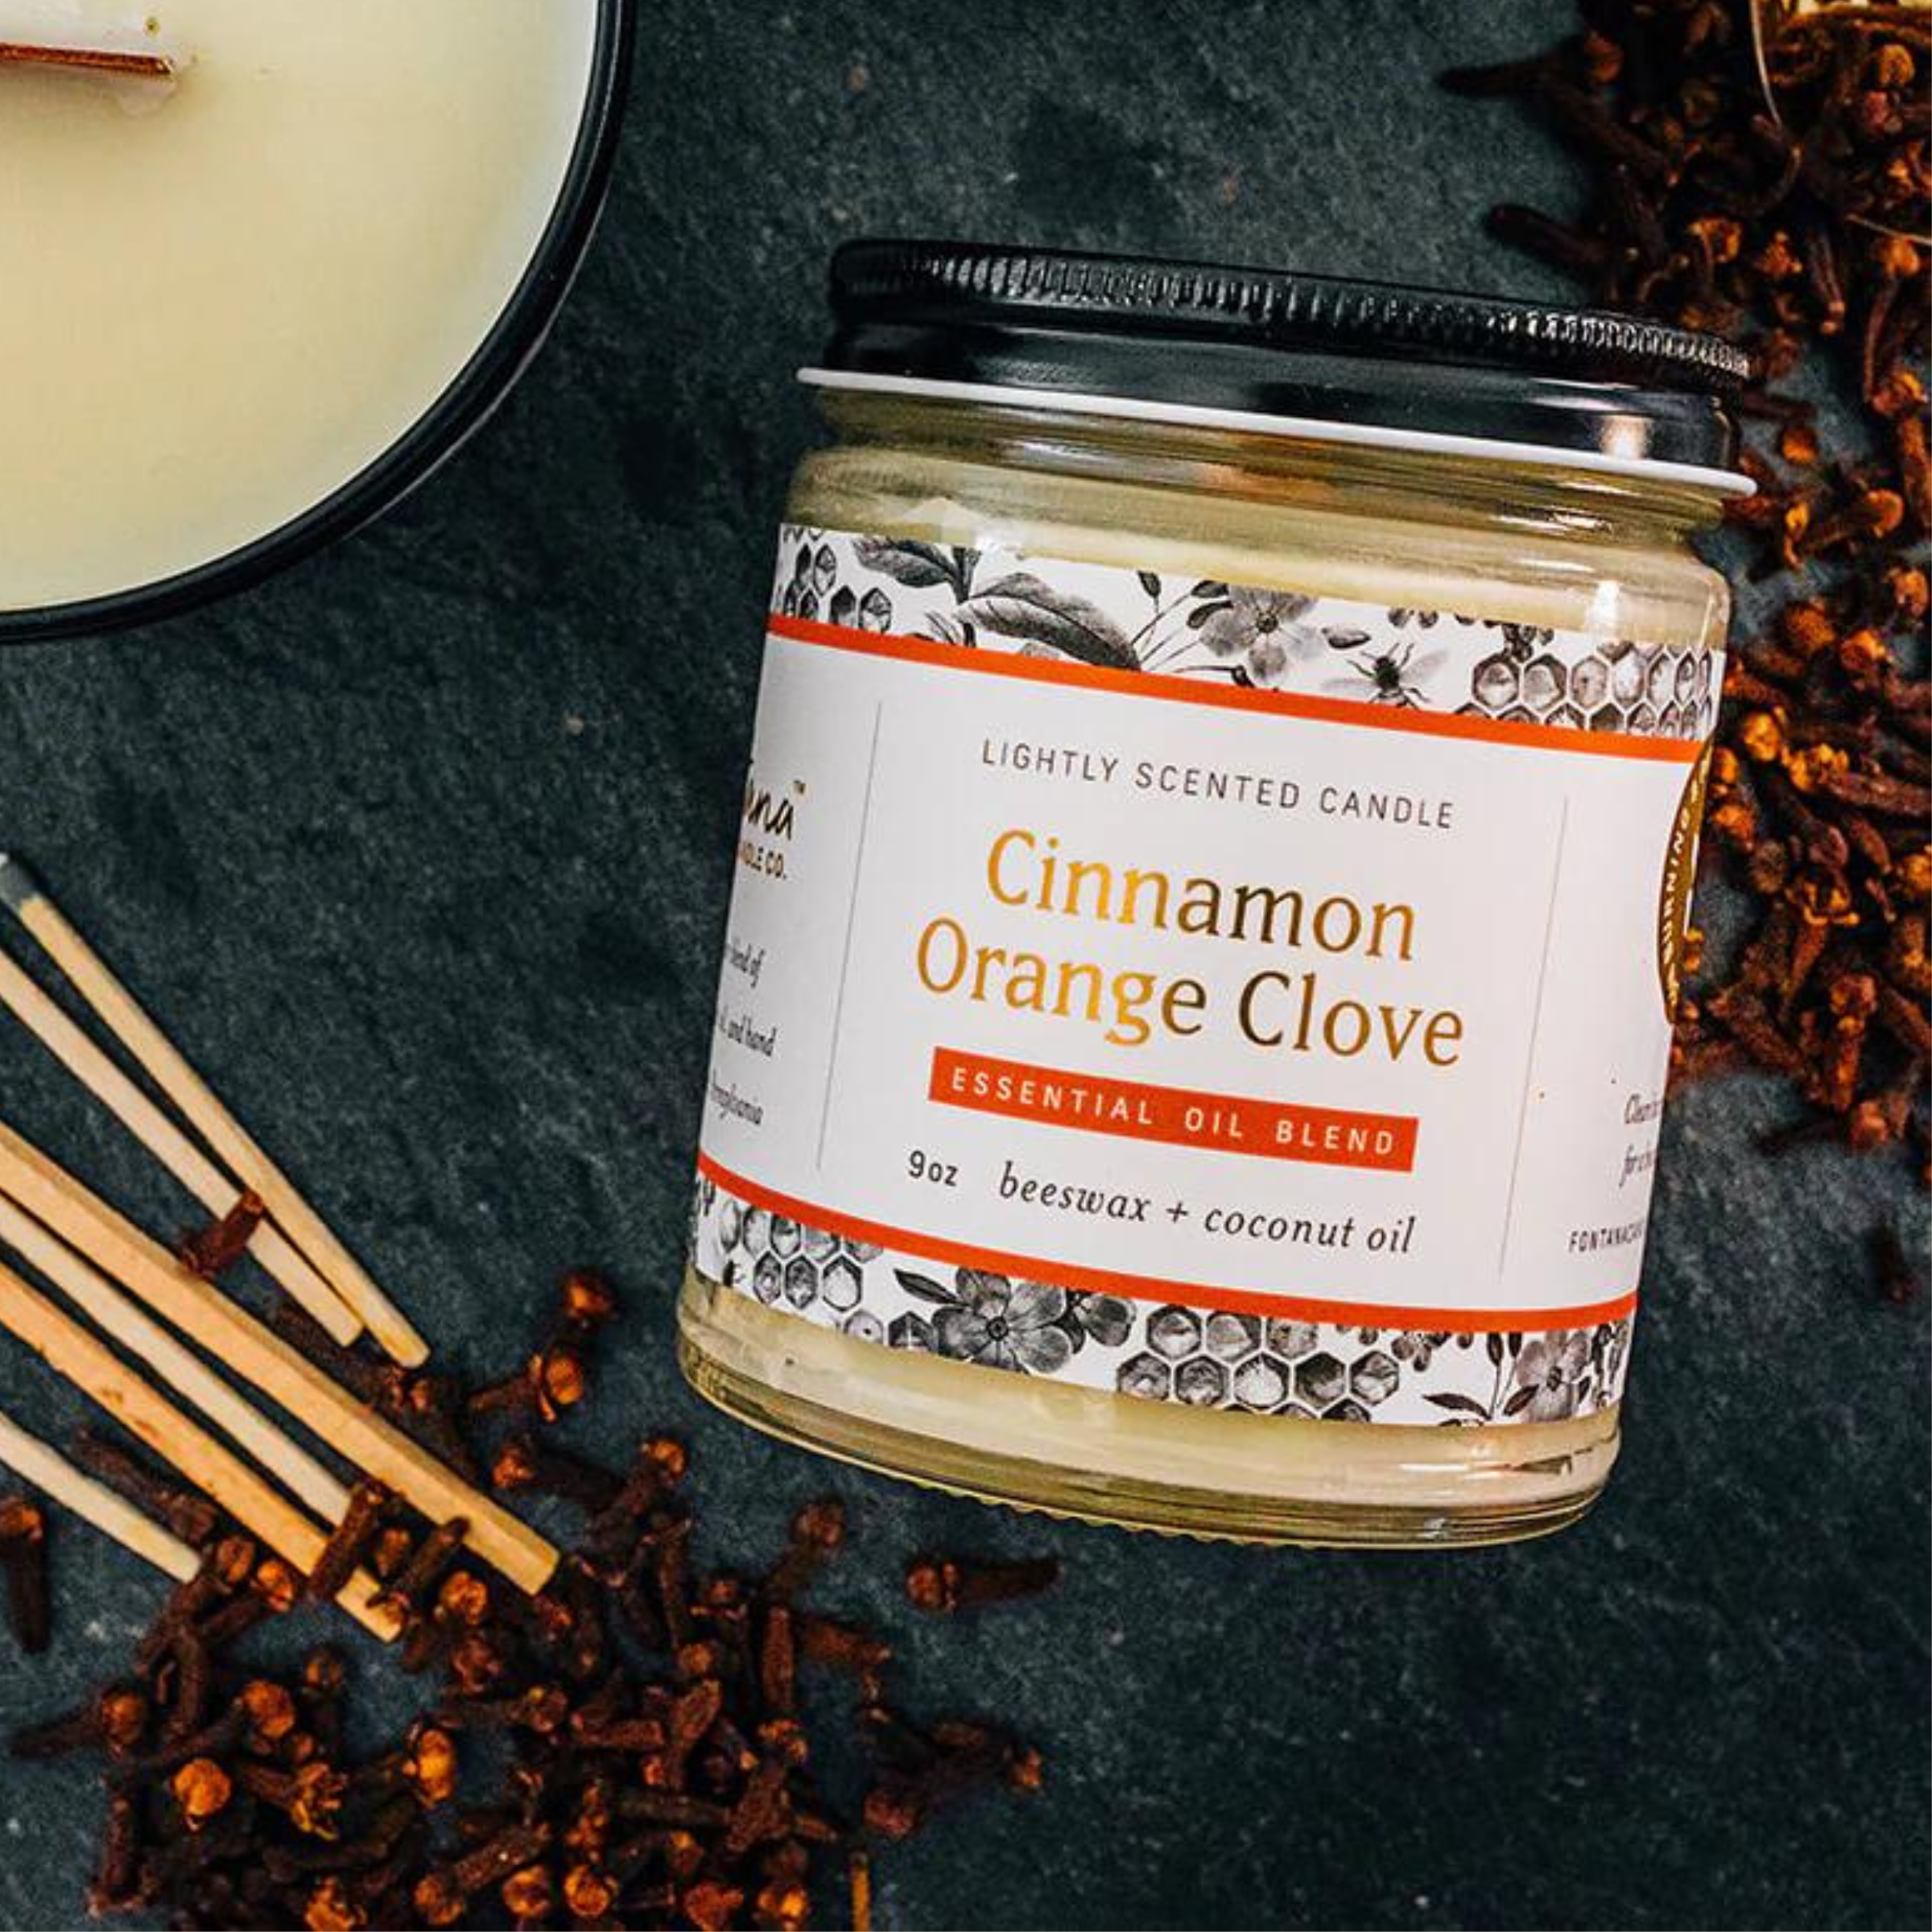 Cinnamon Orange Clove Candle